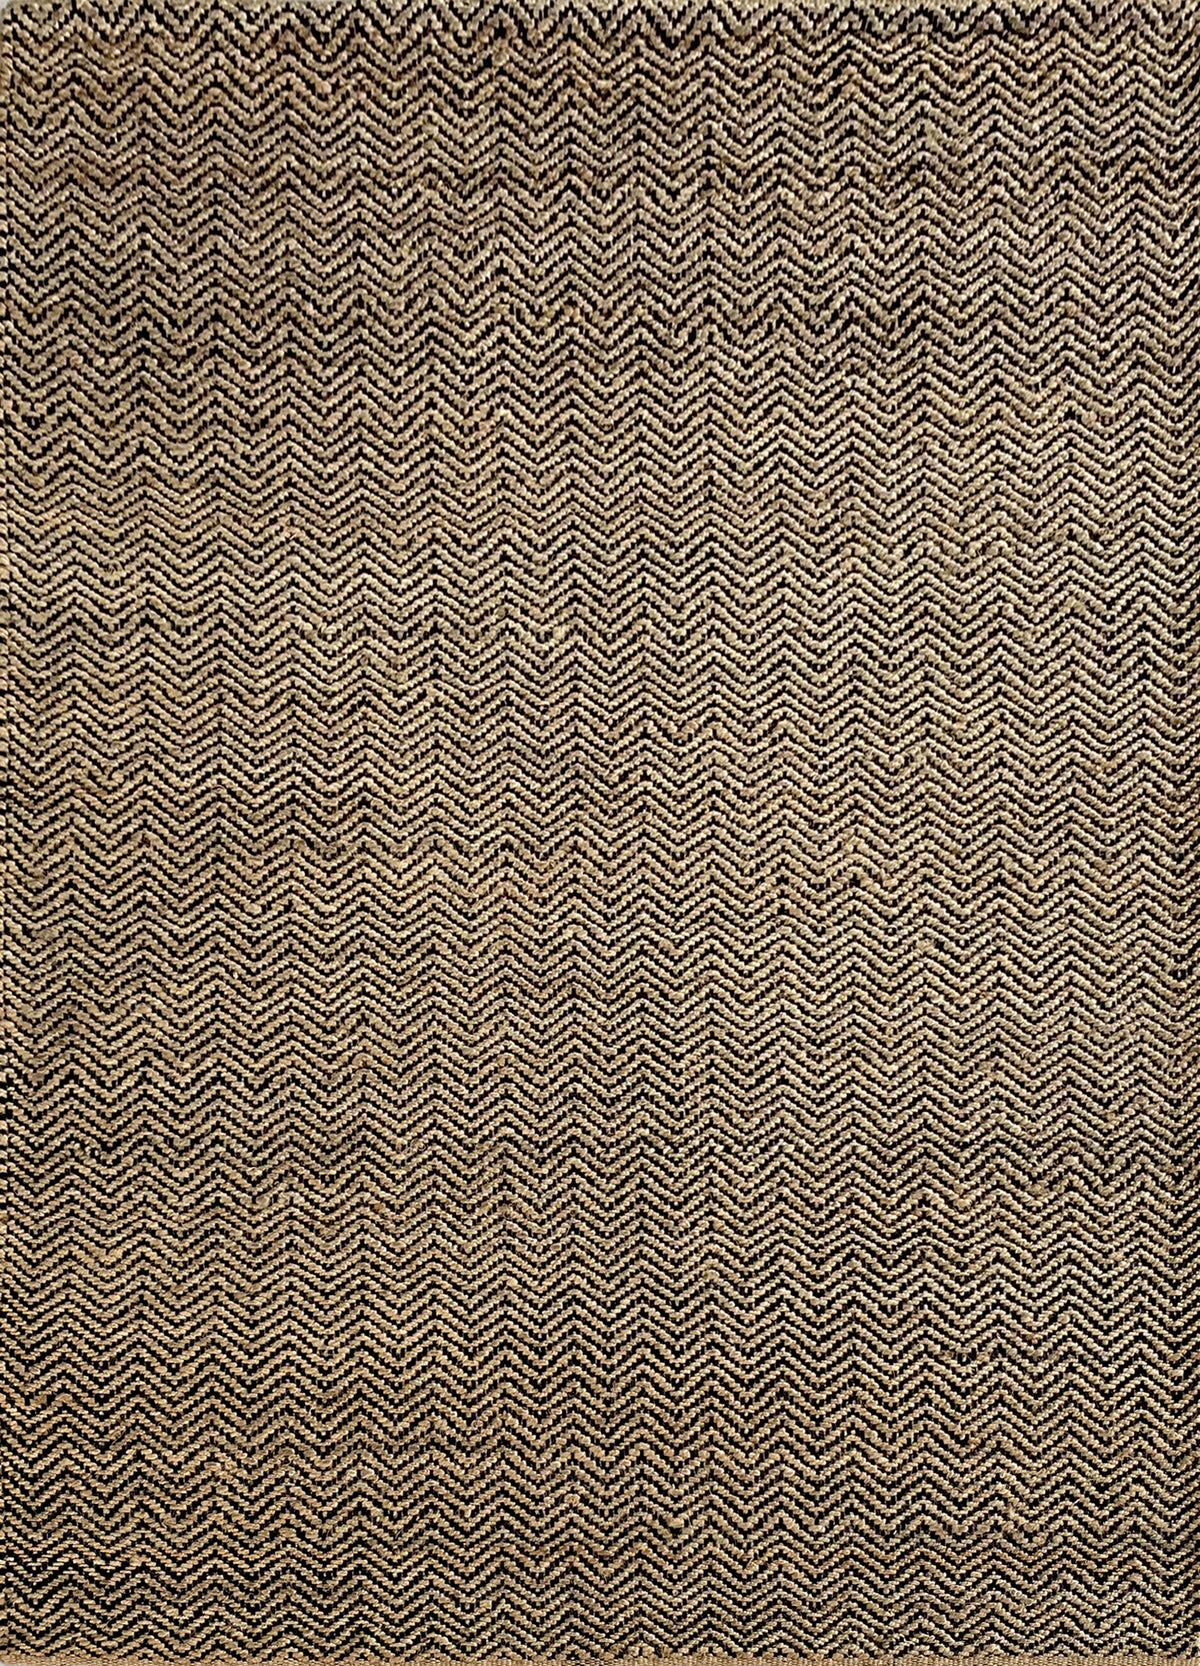 Rugslane Gold Black Jute Carpet 4.0ft X 5.6ft